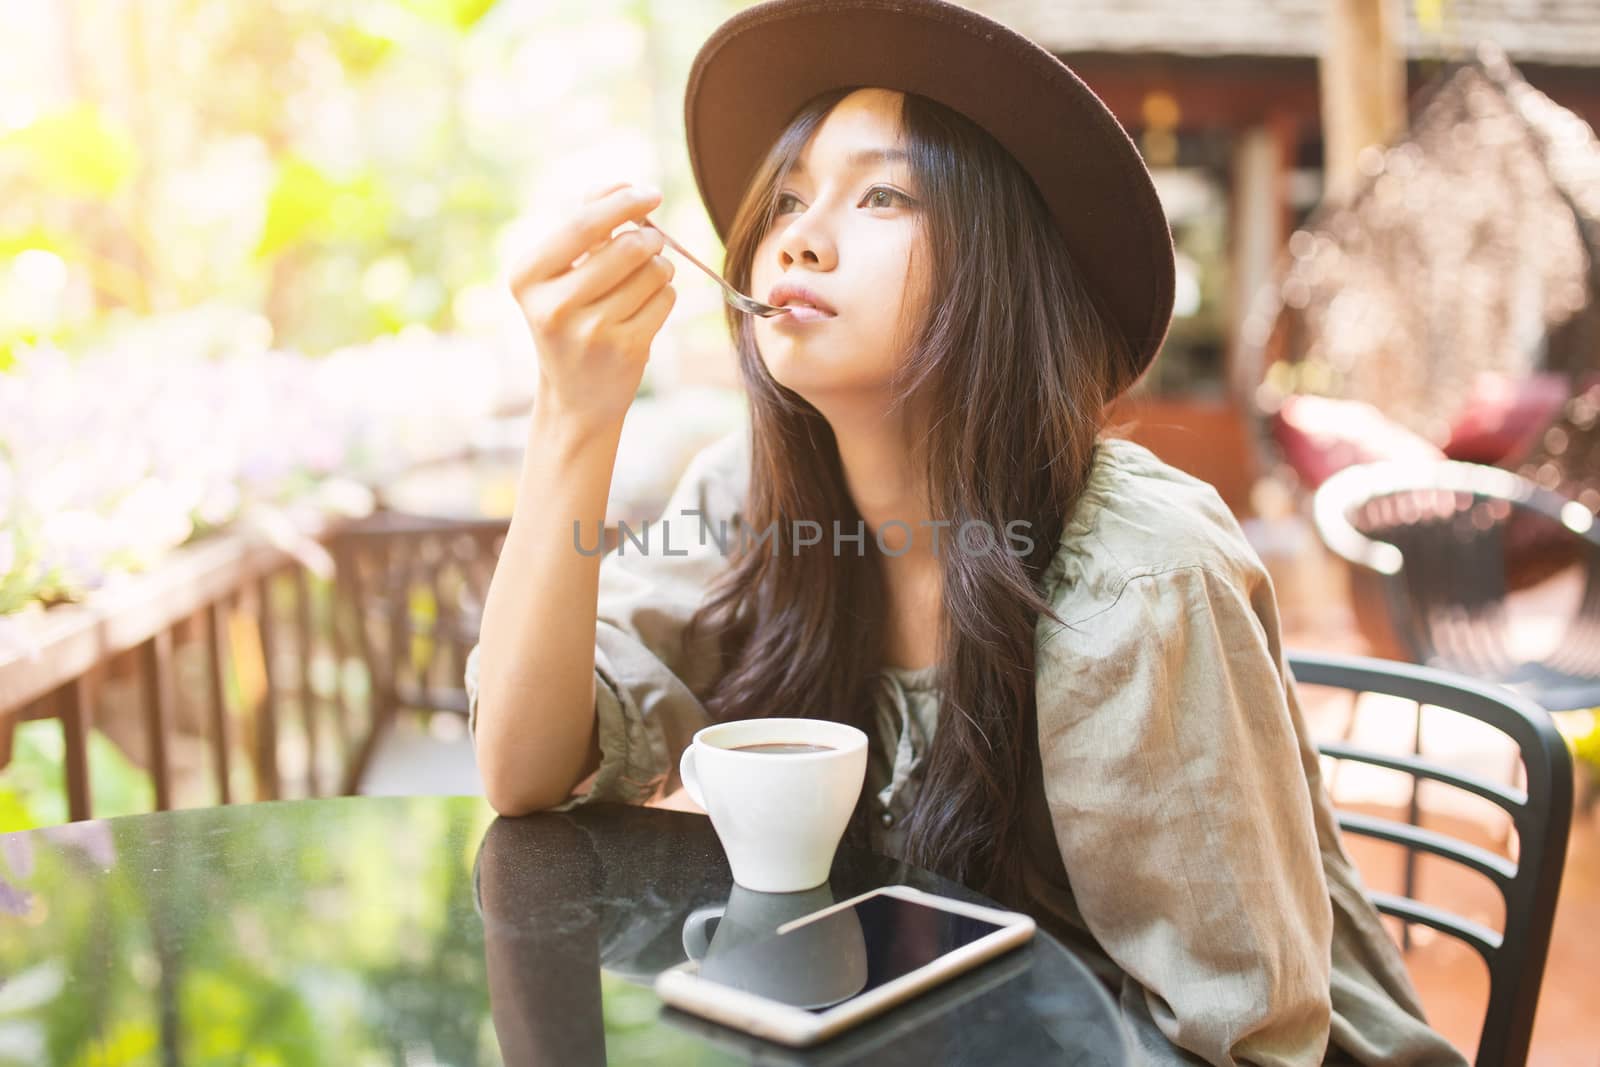 Woman drinking coffee in the garden, outdoor in sunlight light, enjoying her morning coffee.